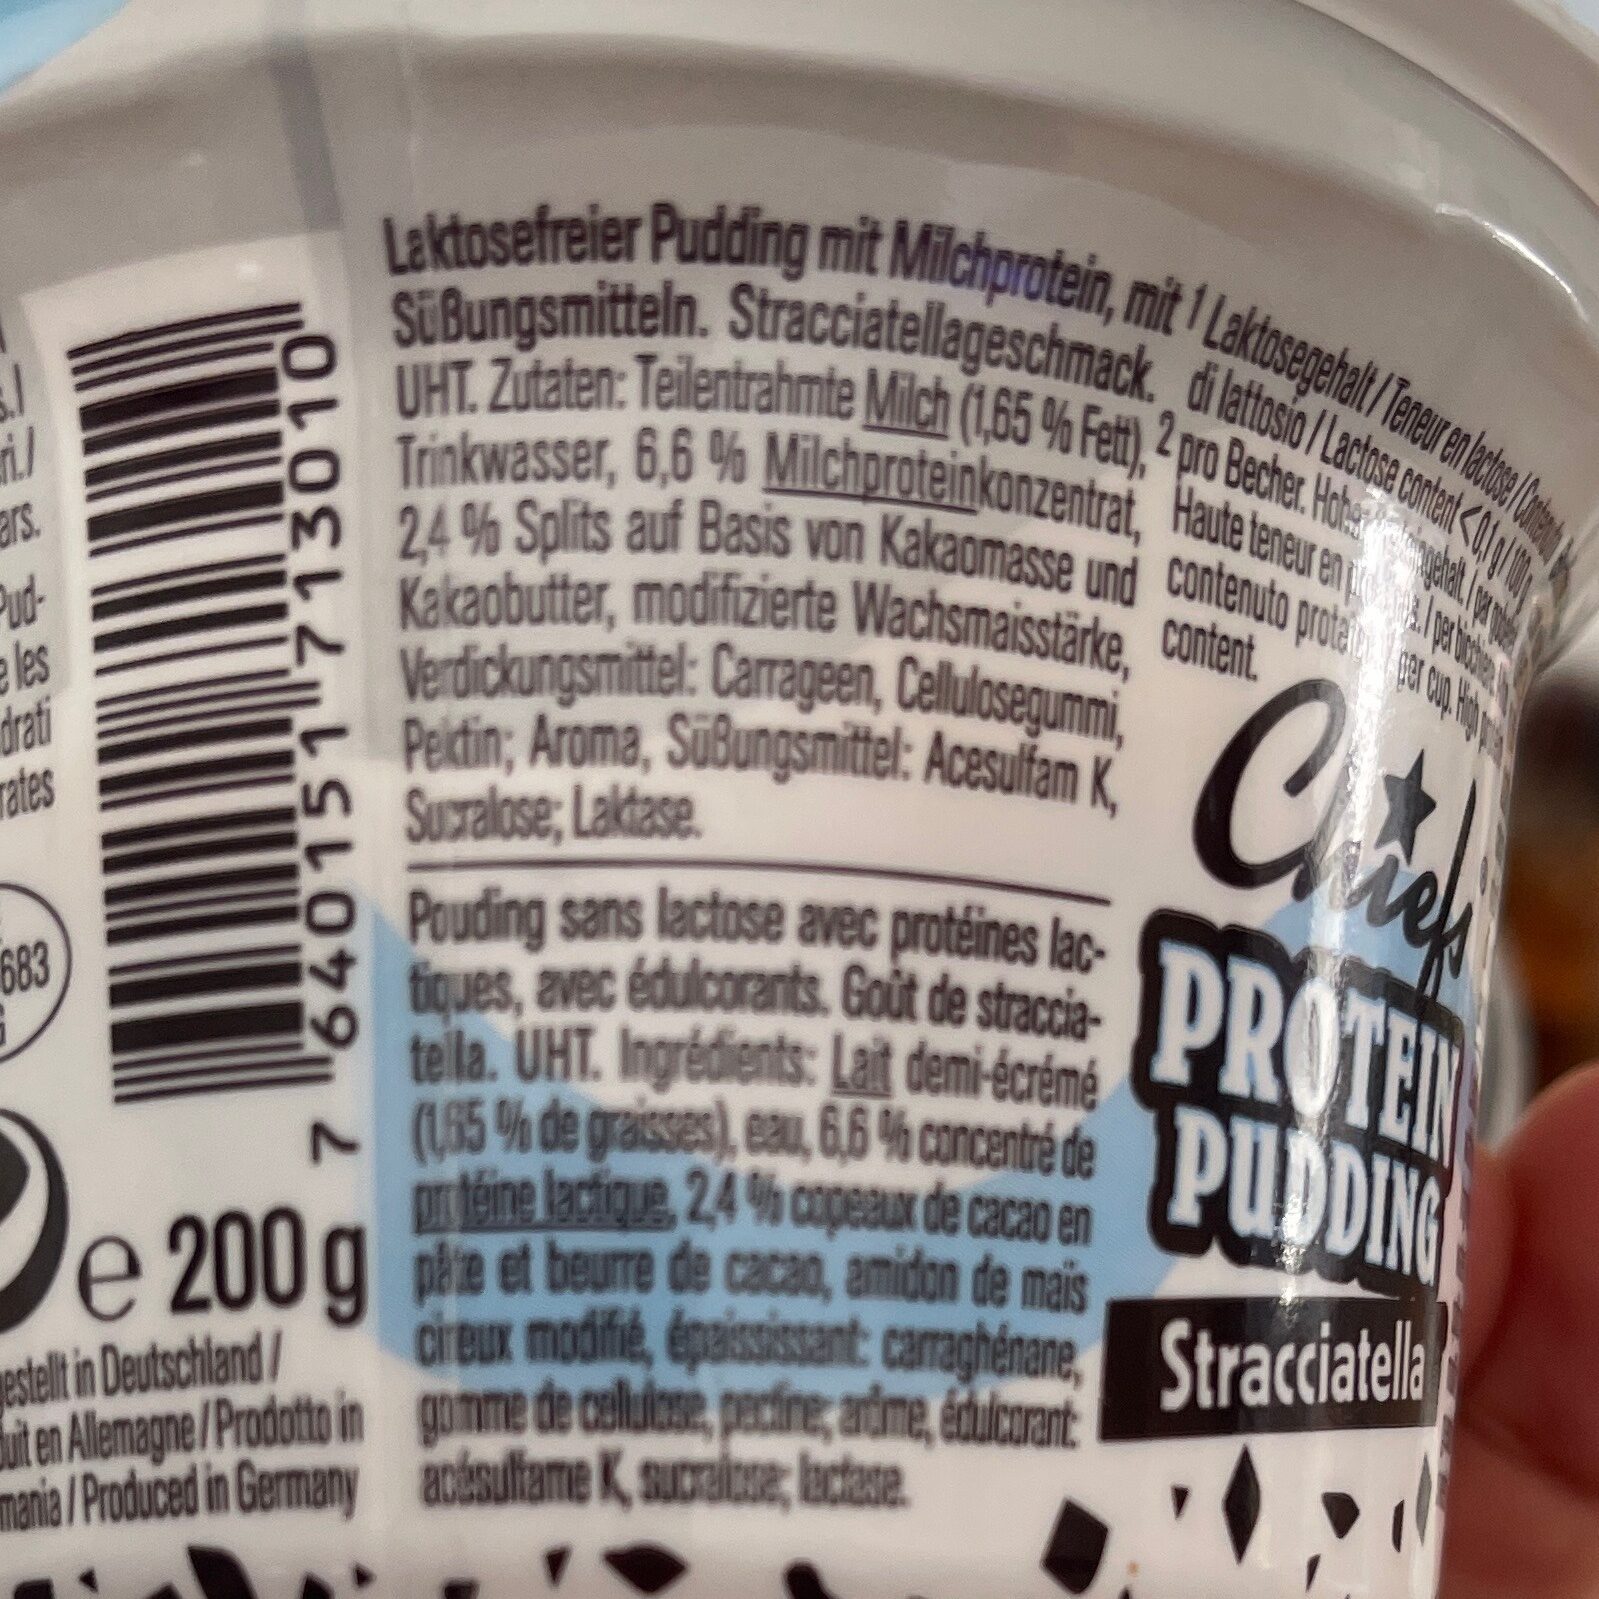 Protein pudding stracciatella - Ingredienti - en